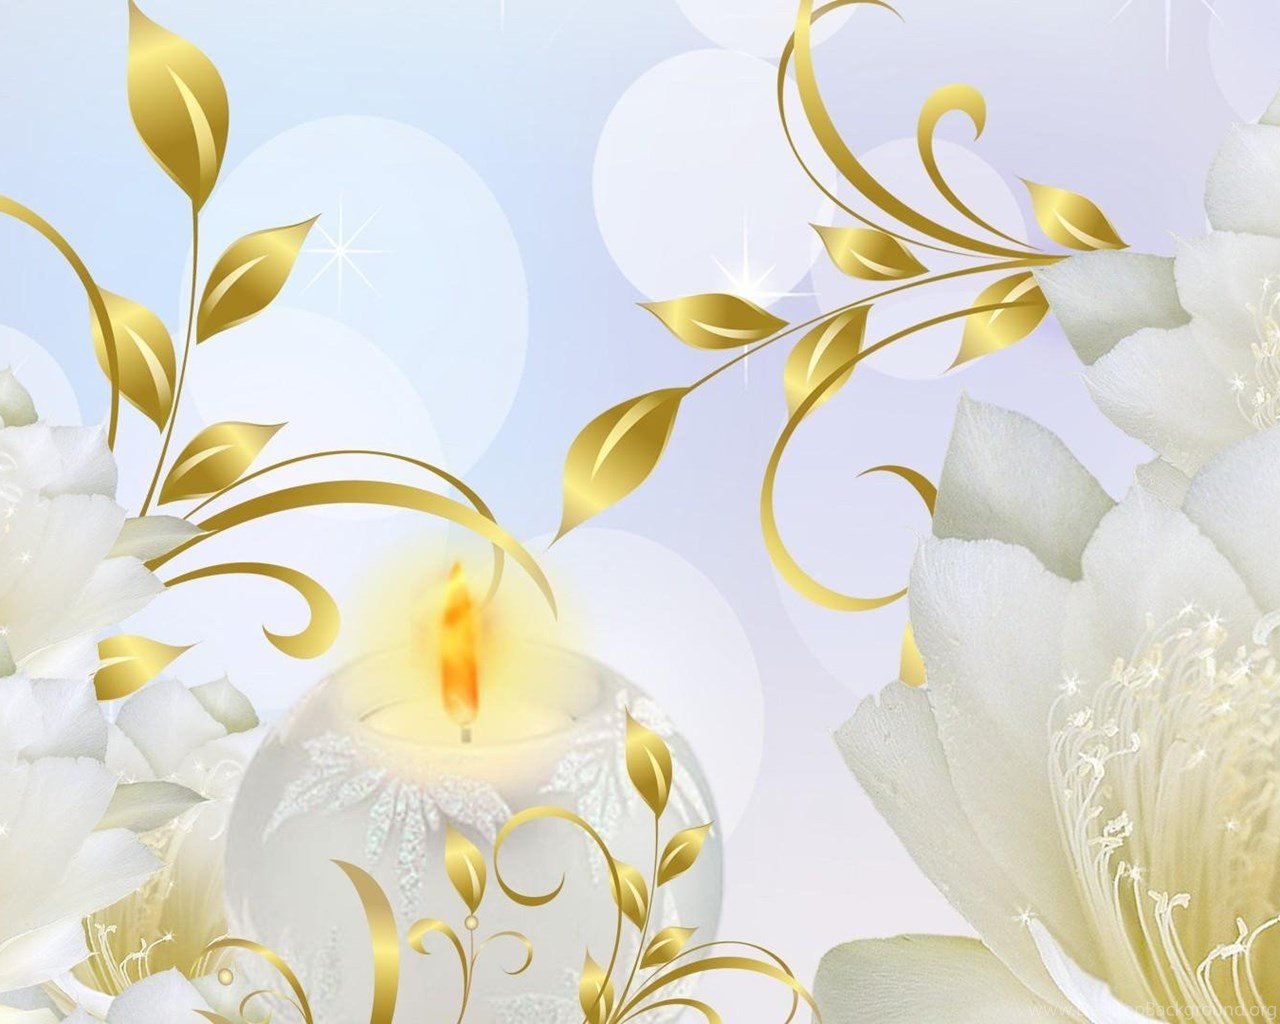 Justpict.com Gold Flowers Wallpaper Desktop Background